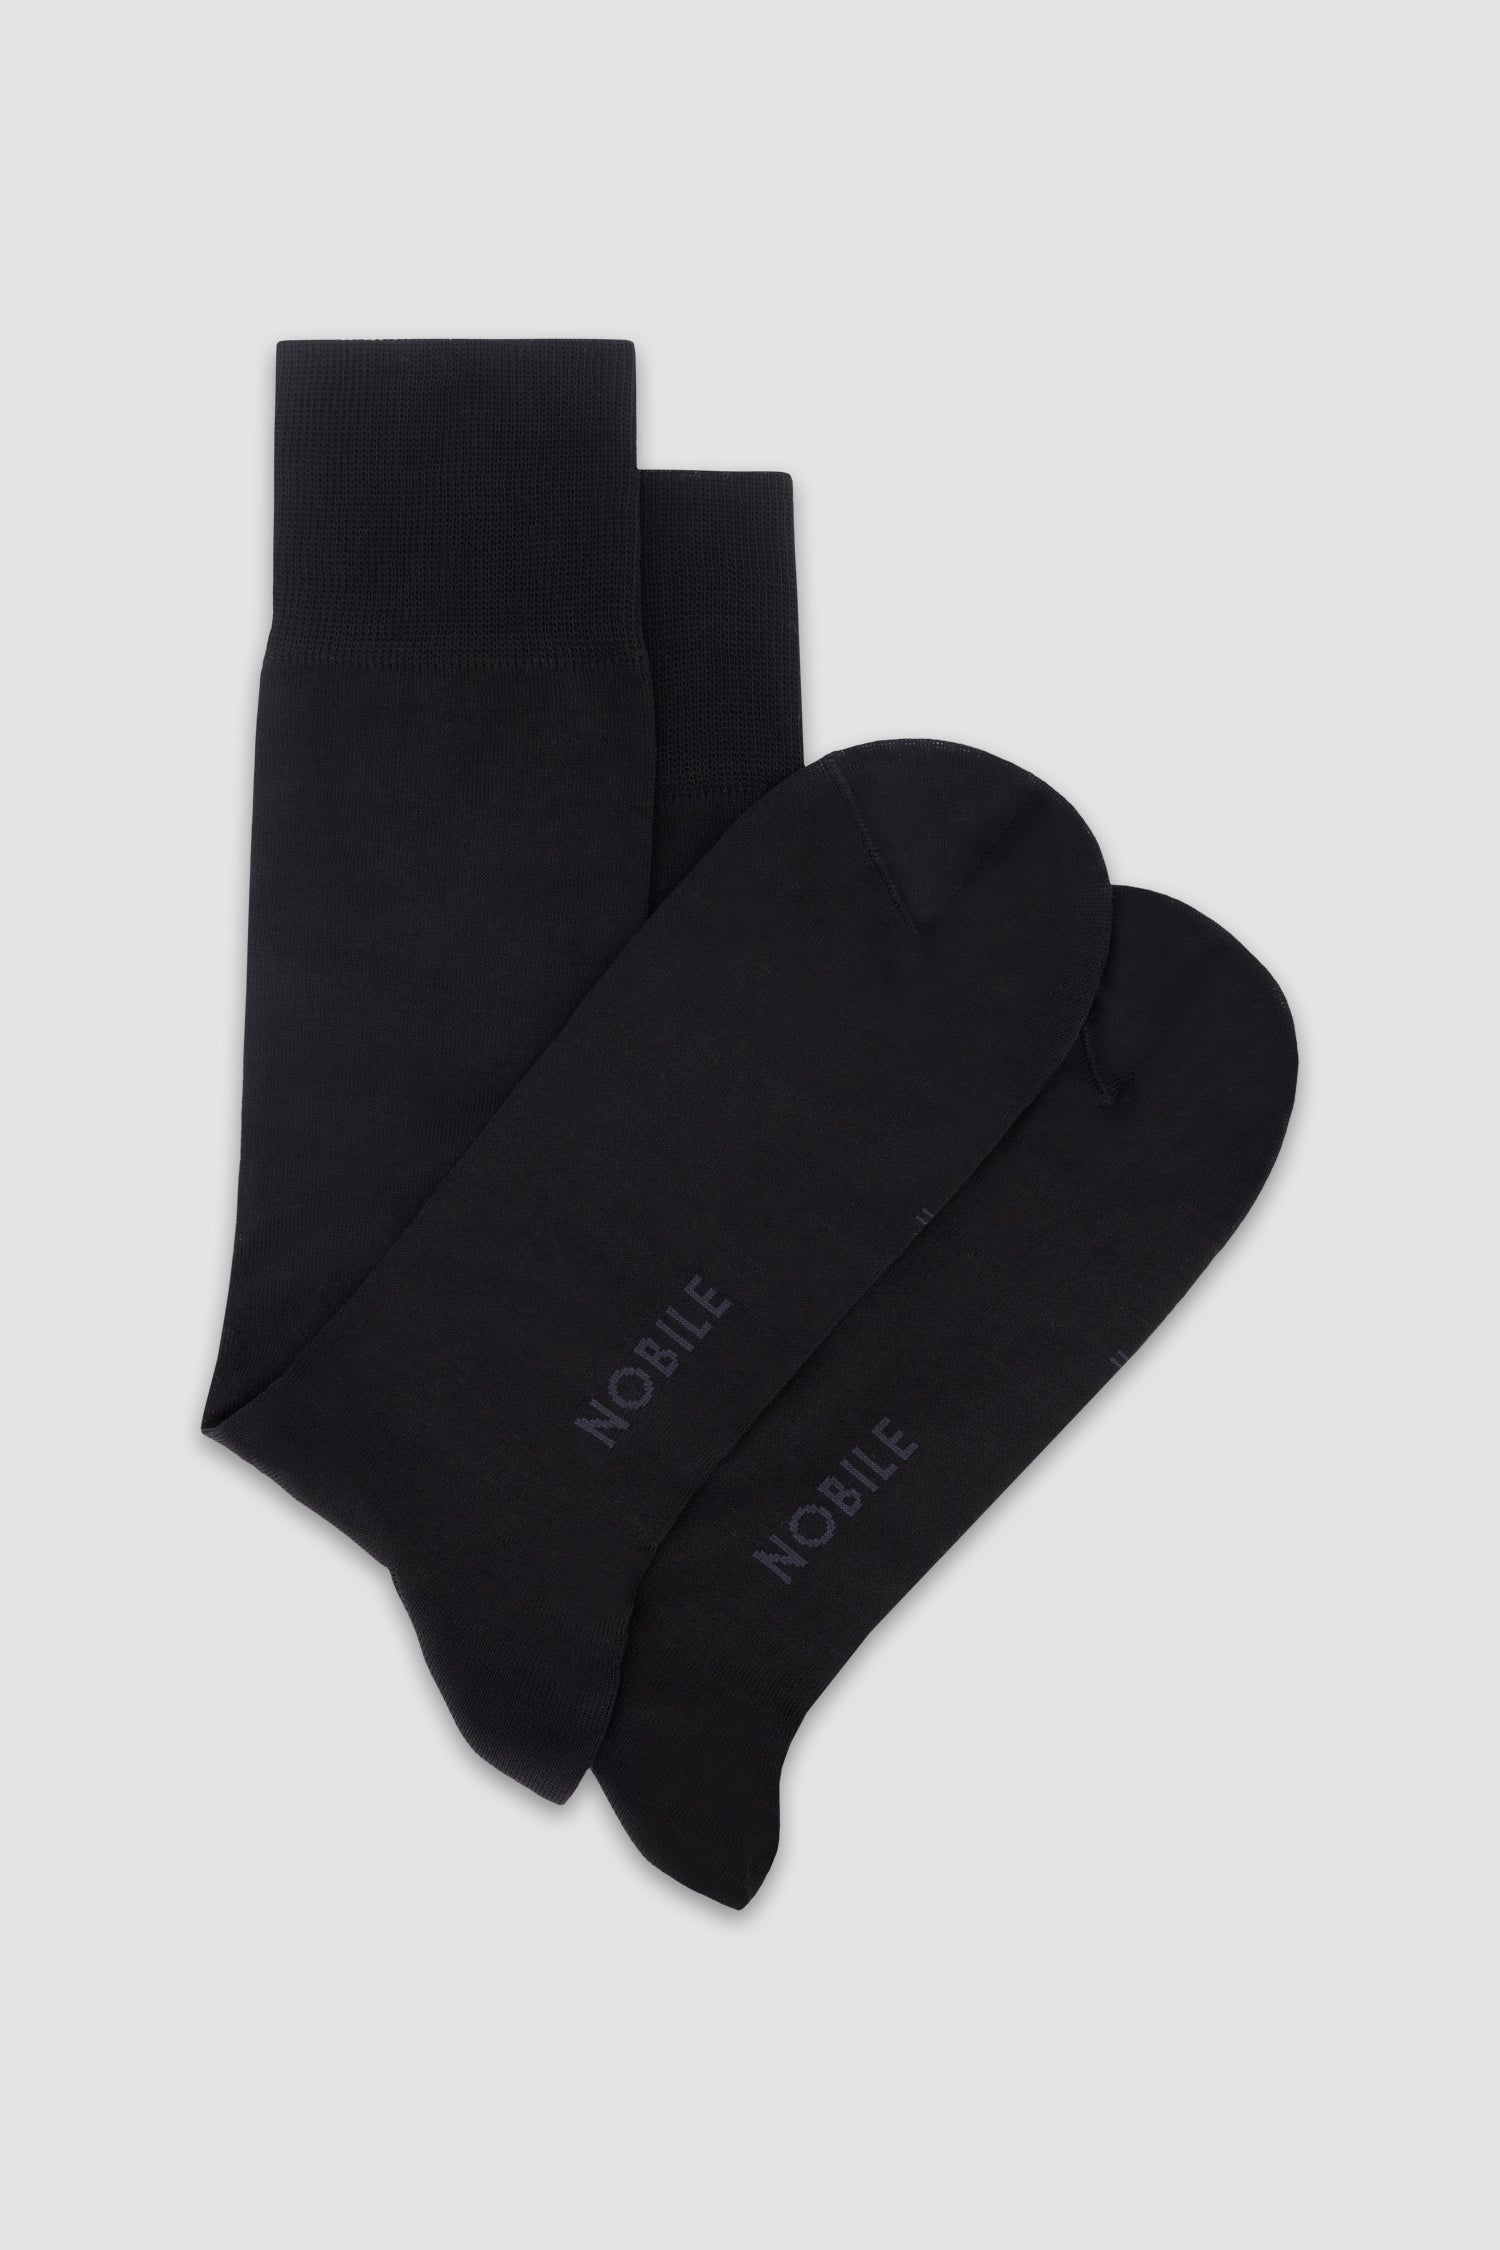 Nobile Solid Black Crew Socks